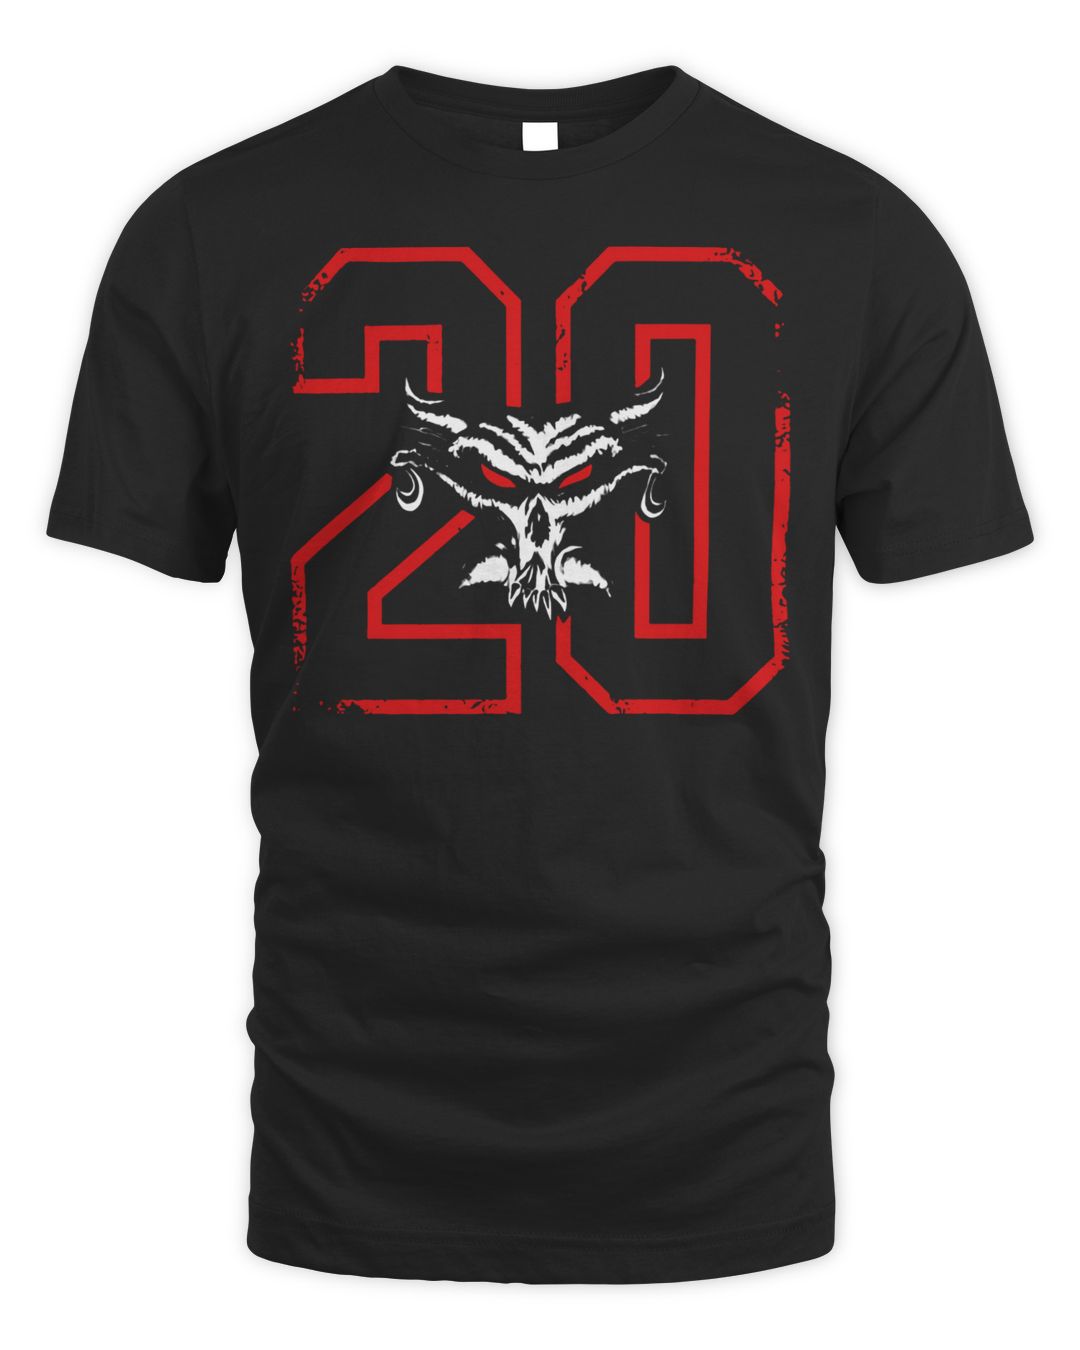 Brock Lesnar 20 Years Shirt